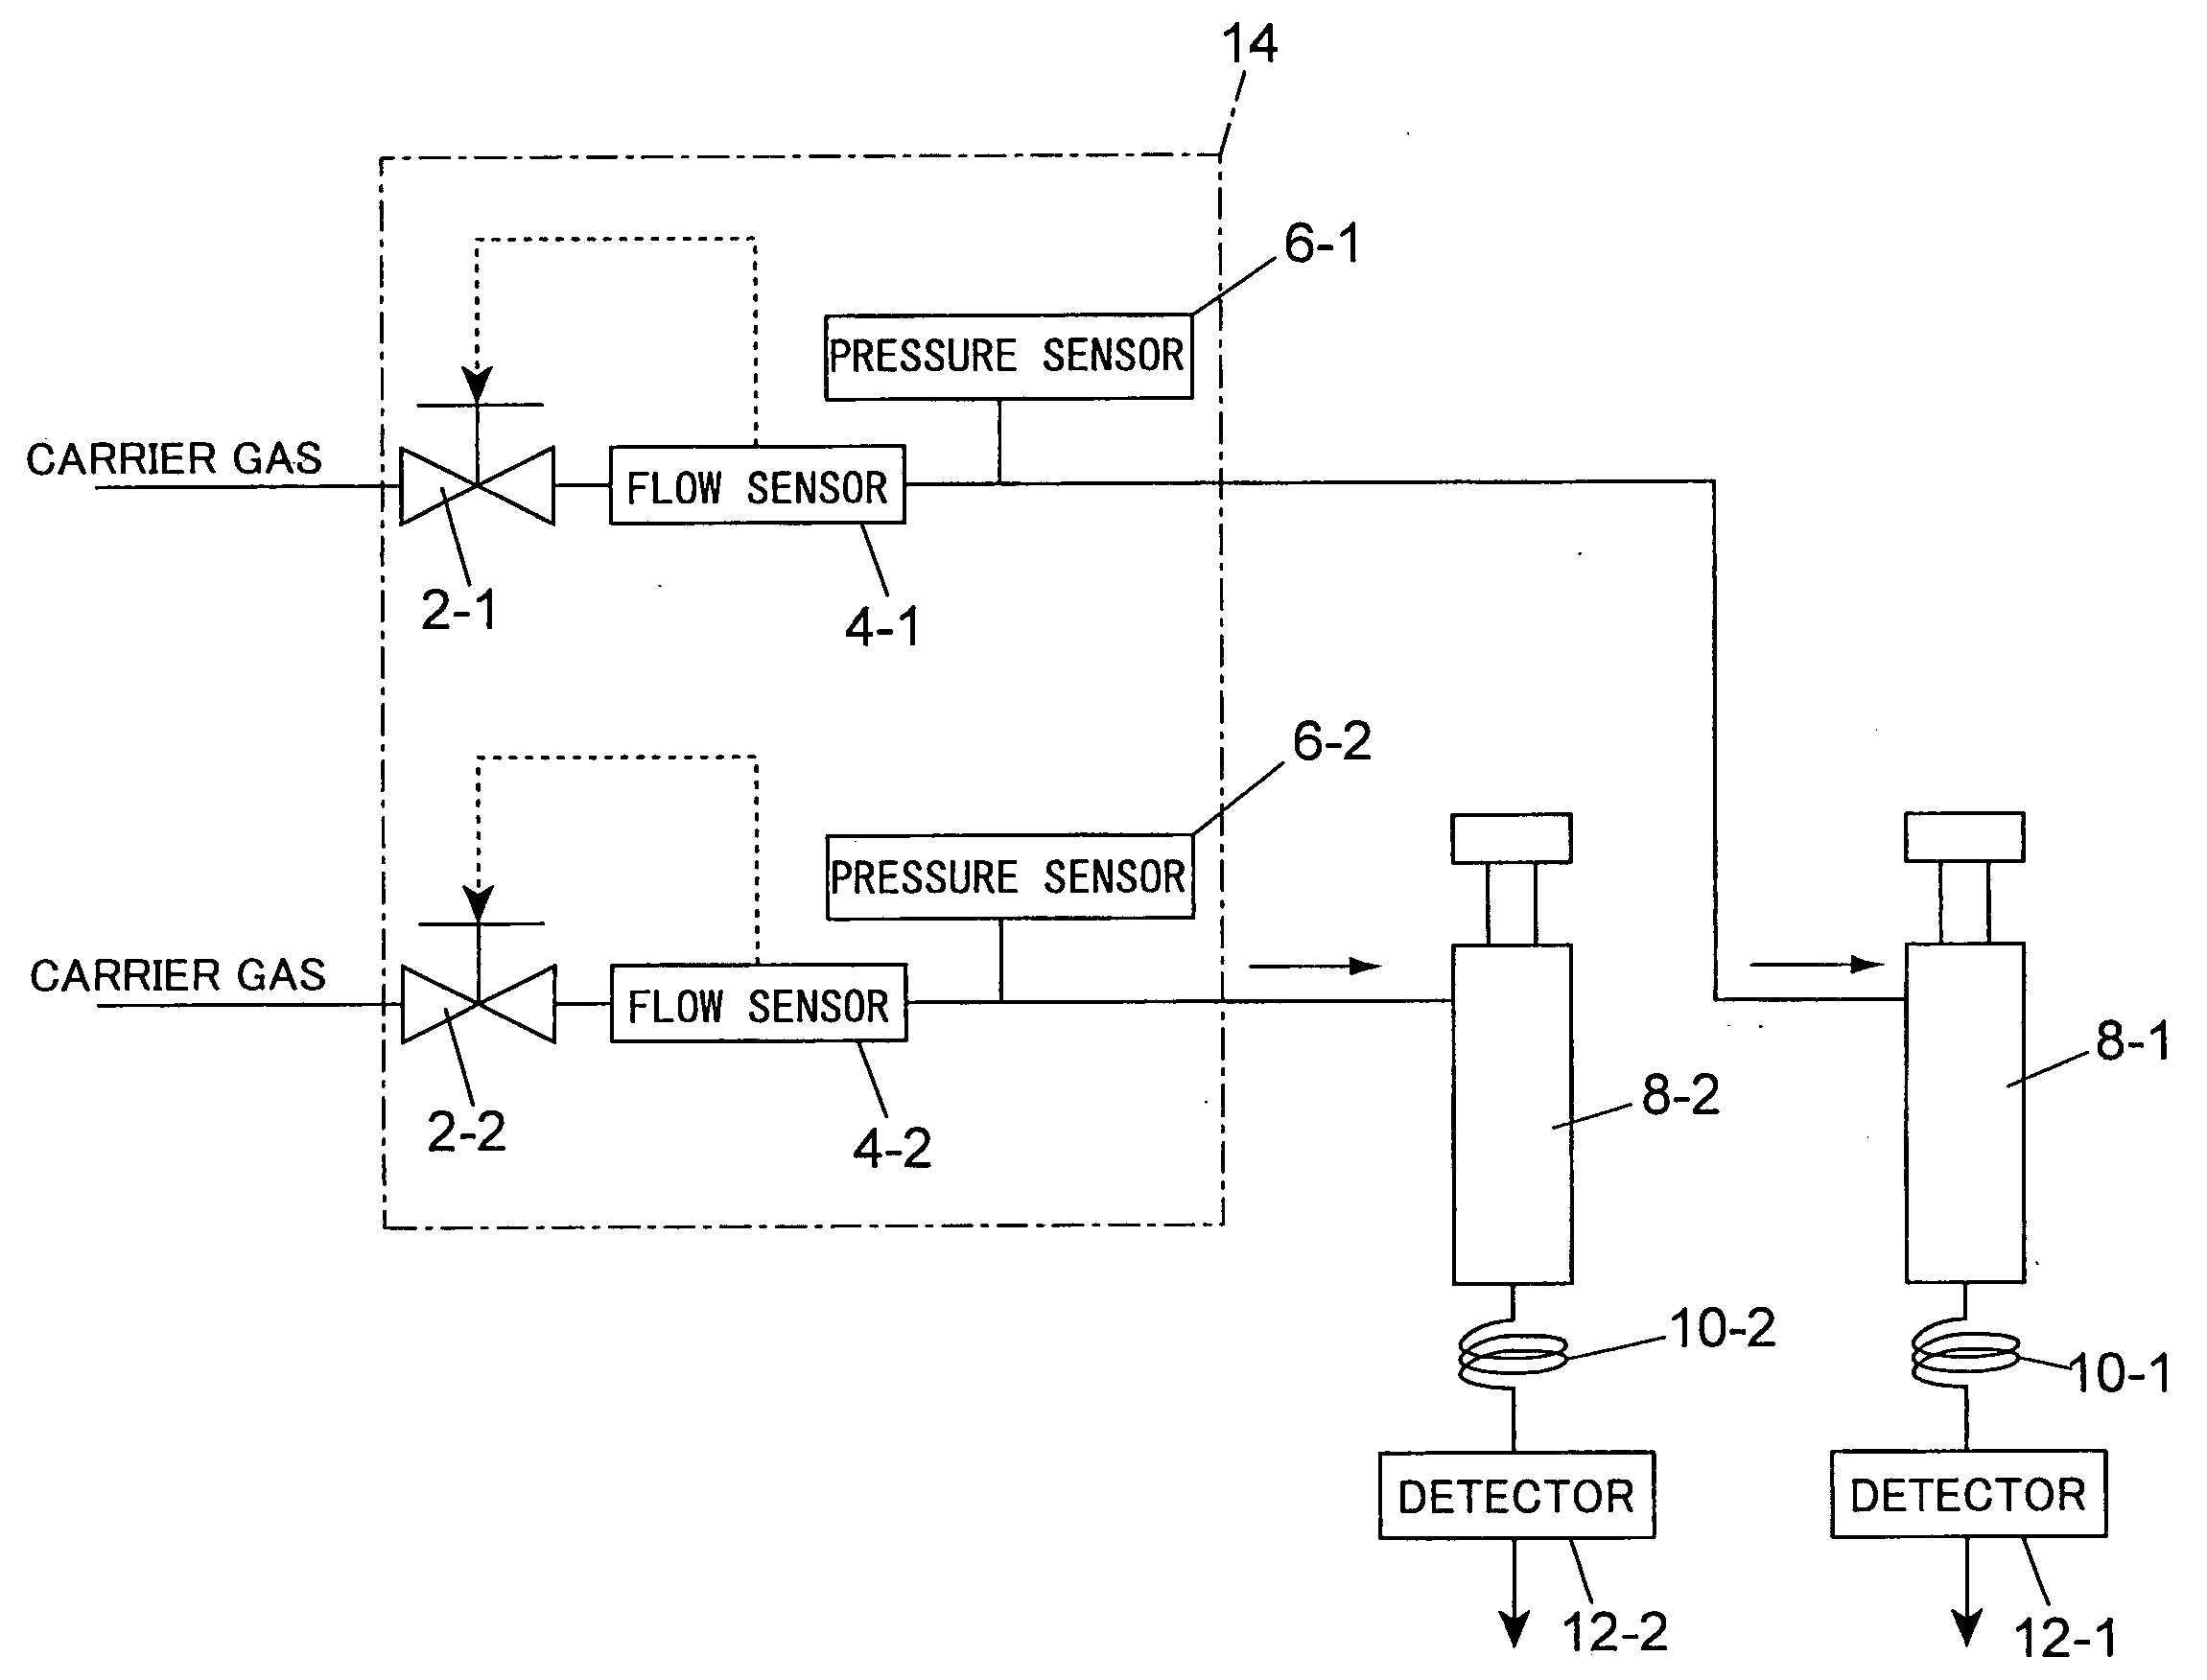 Gas chromatograph set